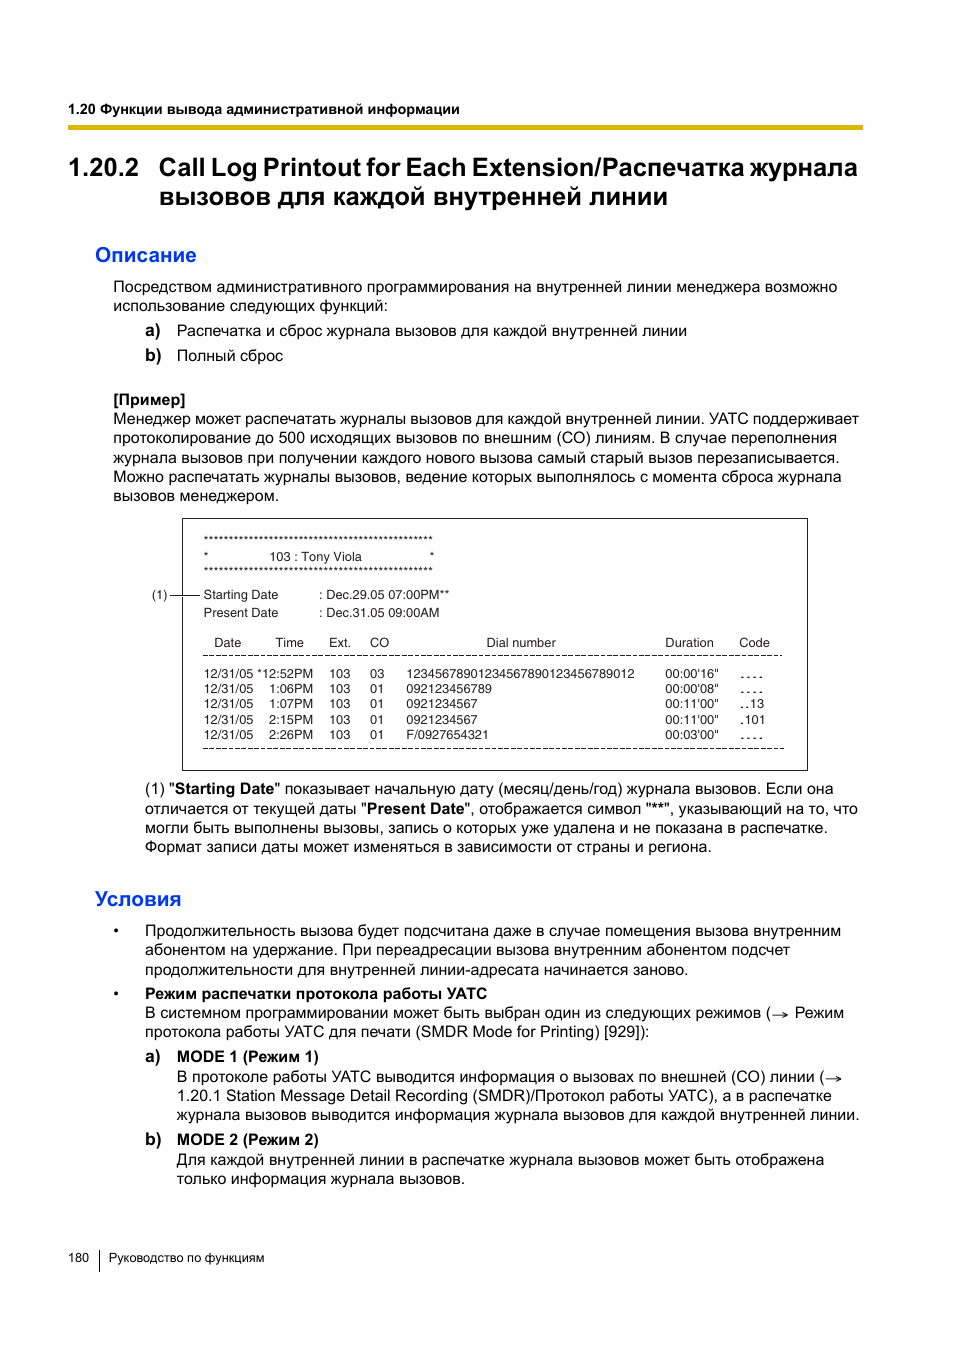 Описание, Условия | Инструкция по эксплуатации Panasonic KX-TEA308RU | Страница 180 / 318